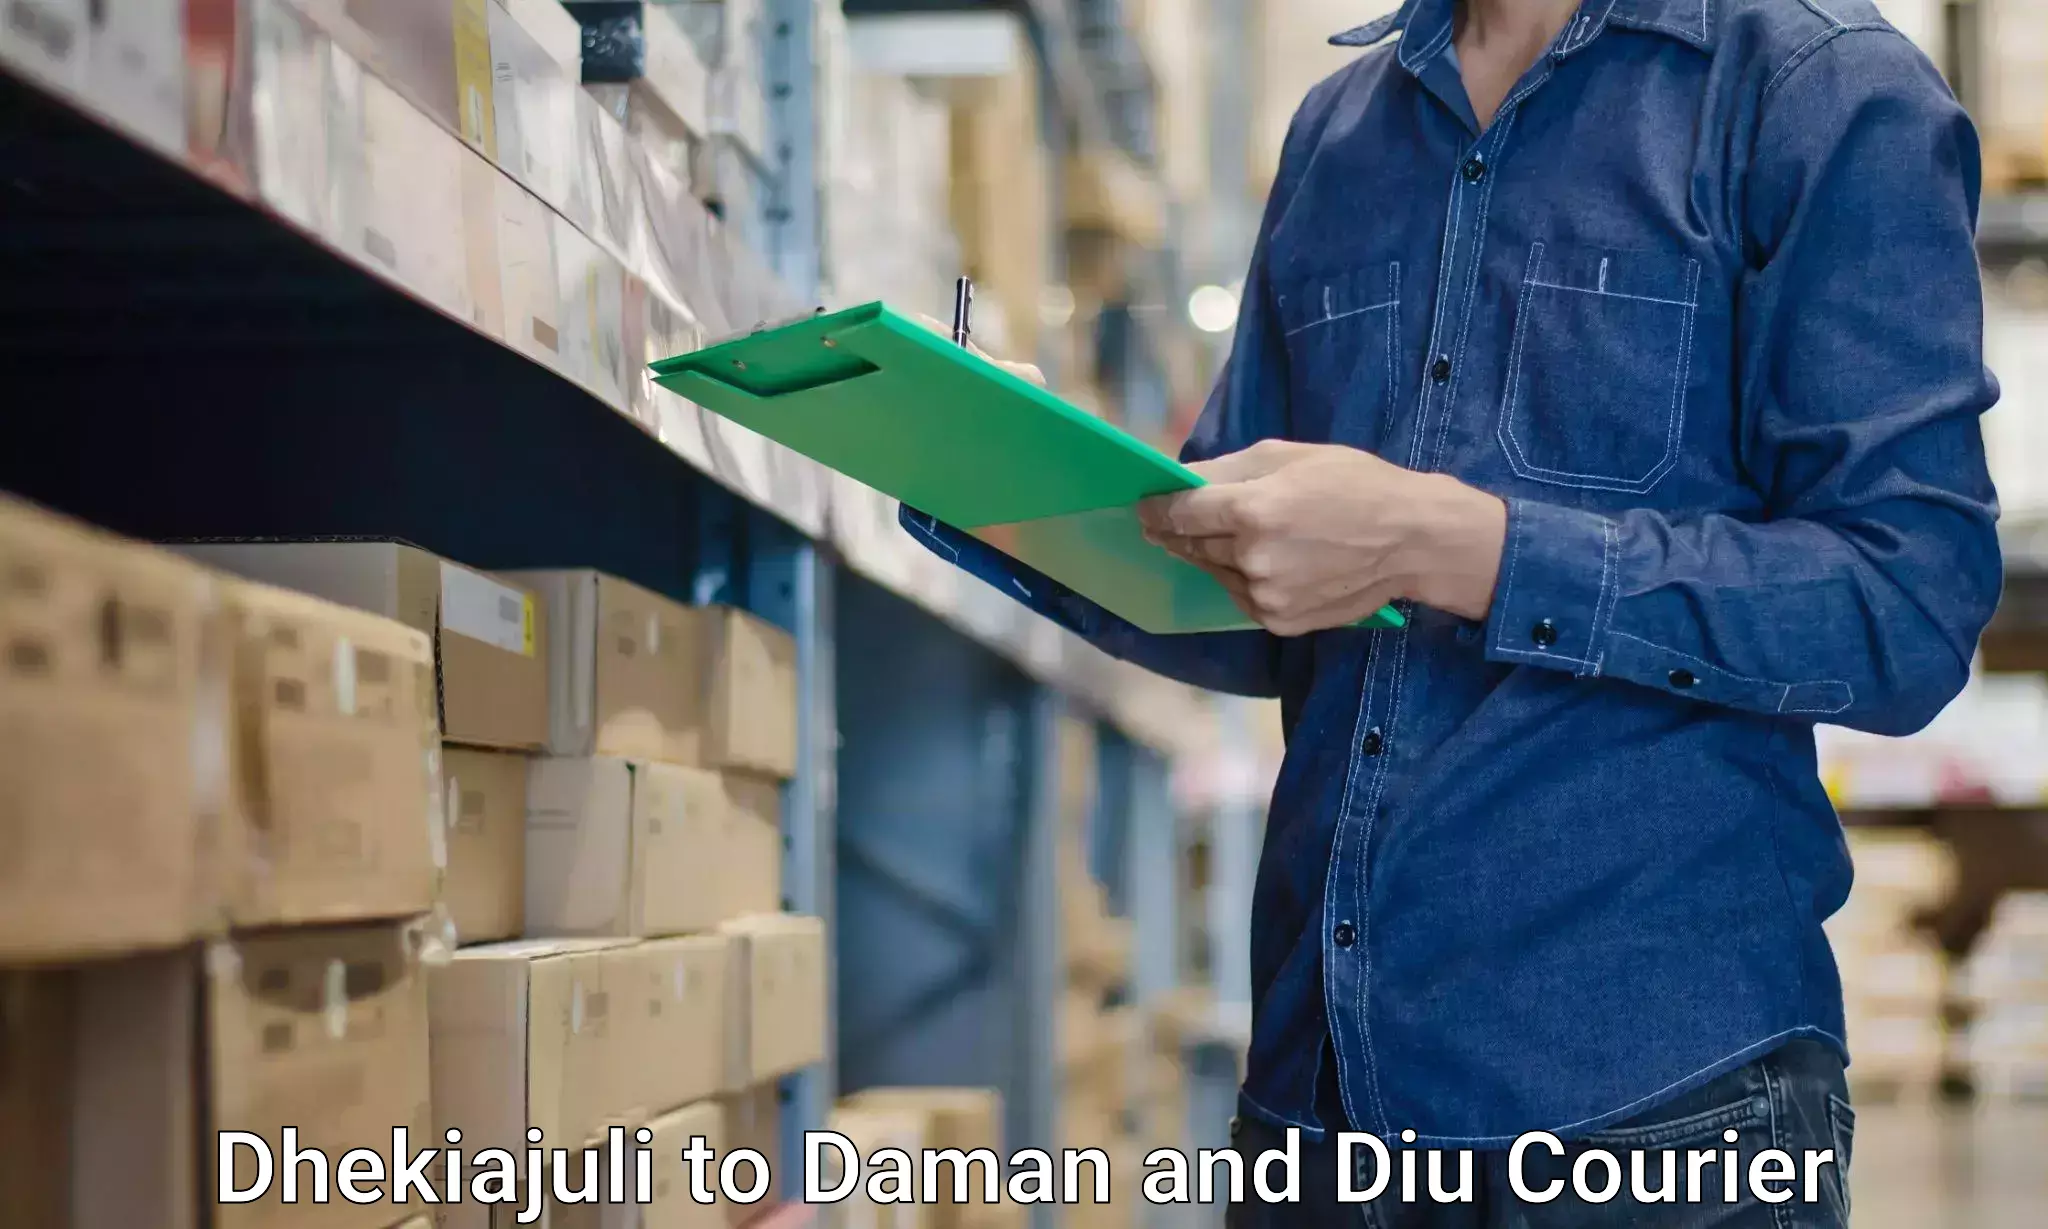 Professional moving company Dhekiajuli to Diu